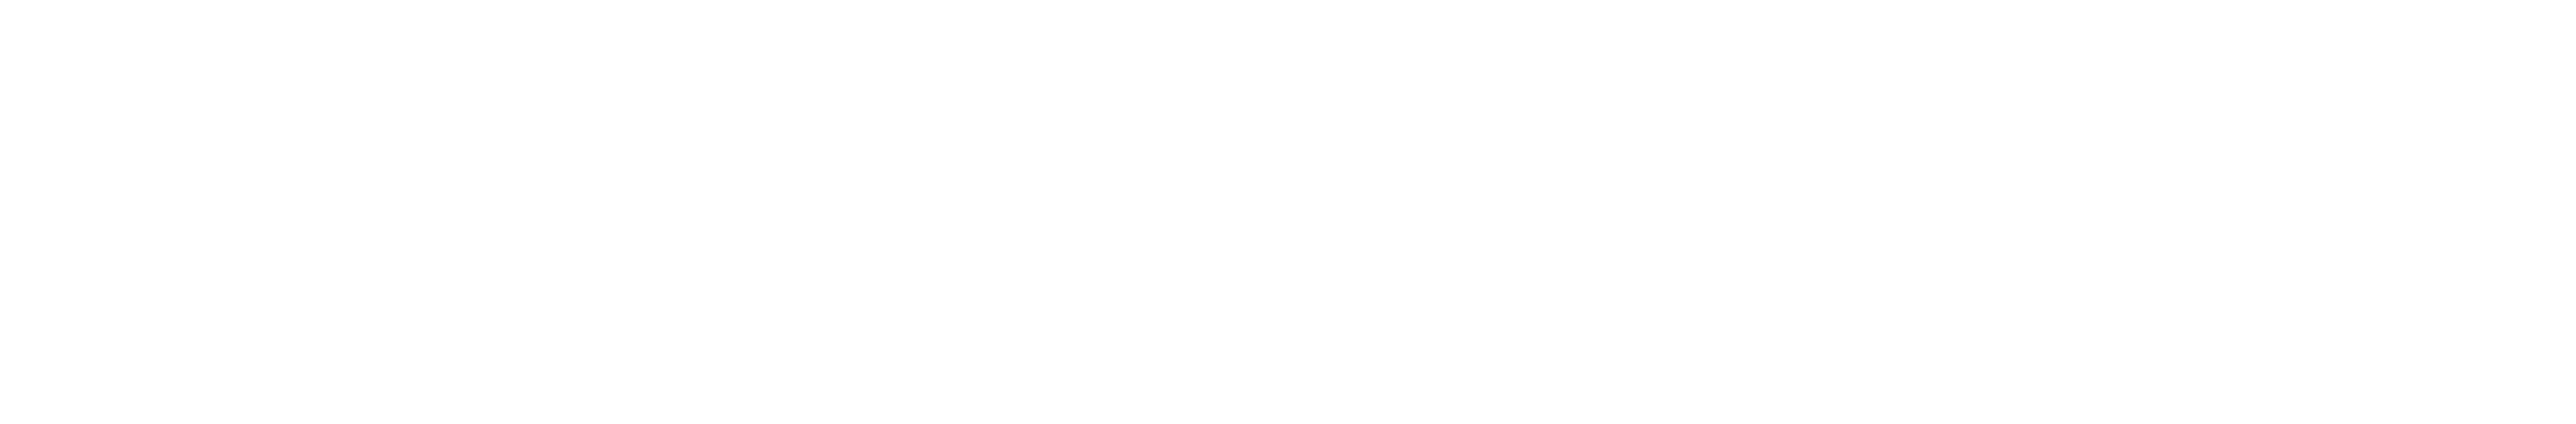 Elemental_logo_weiss